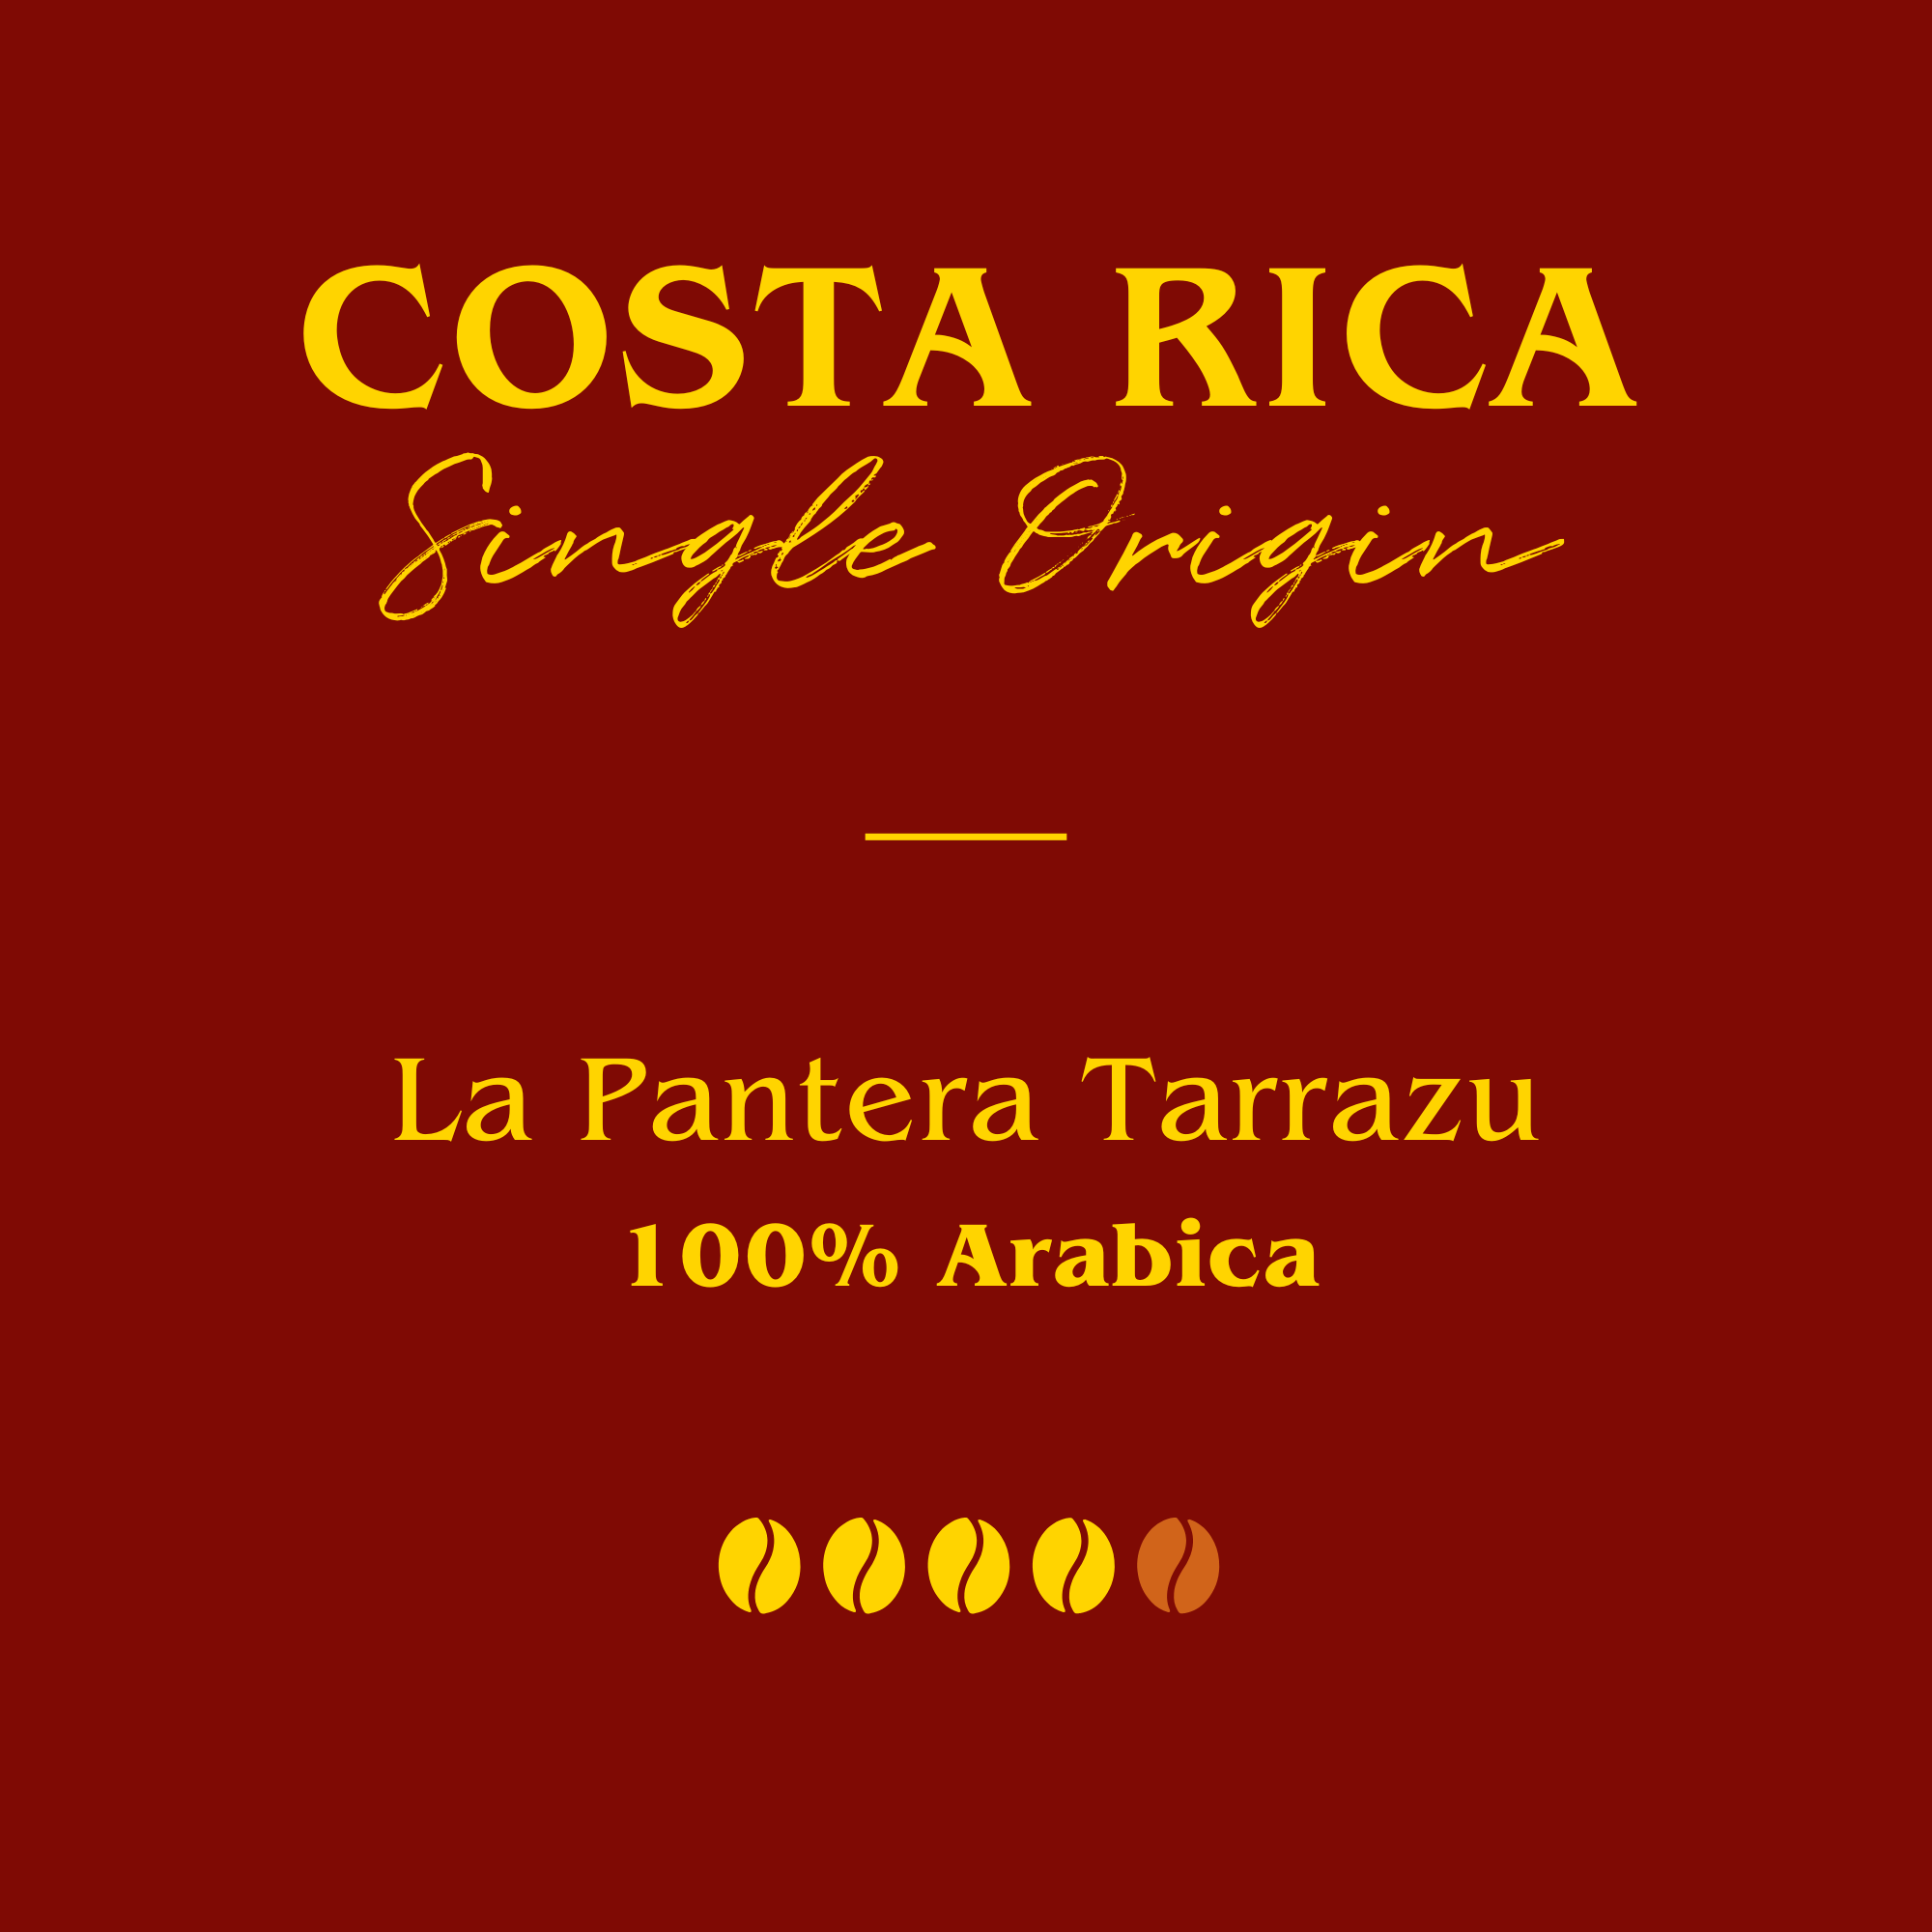 Costa Rica - La Pantera Tarrazu